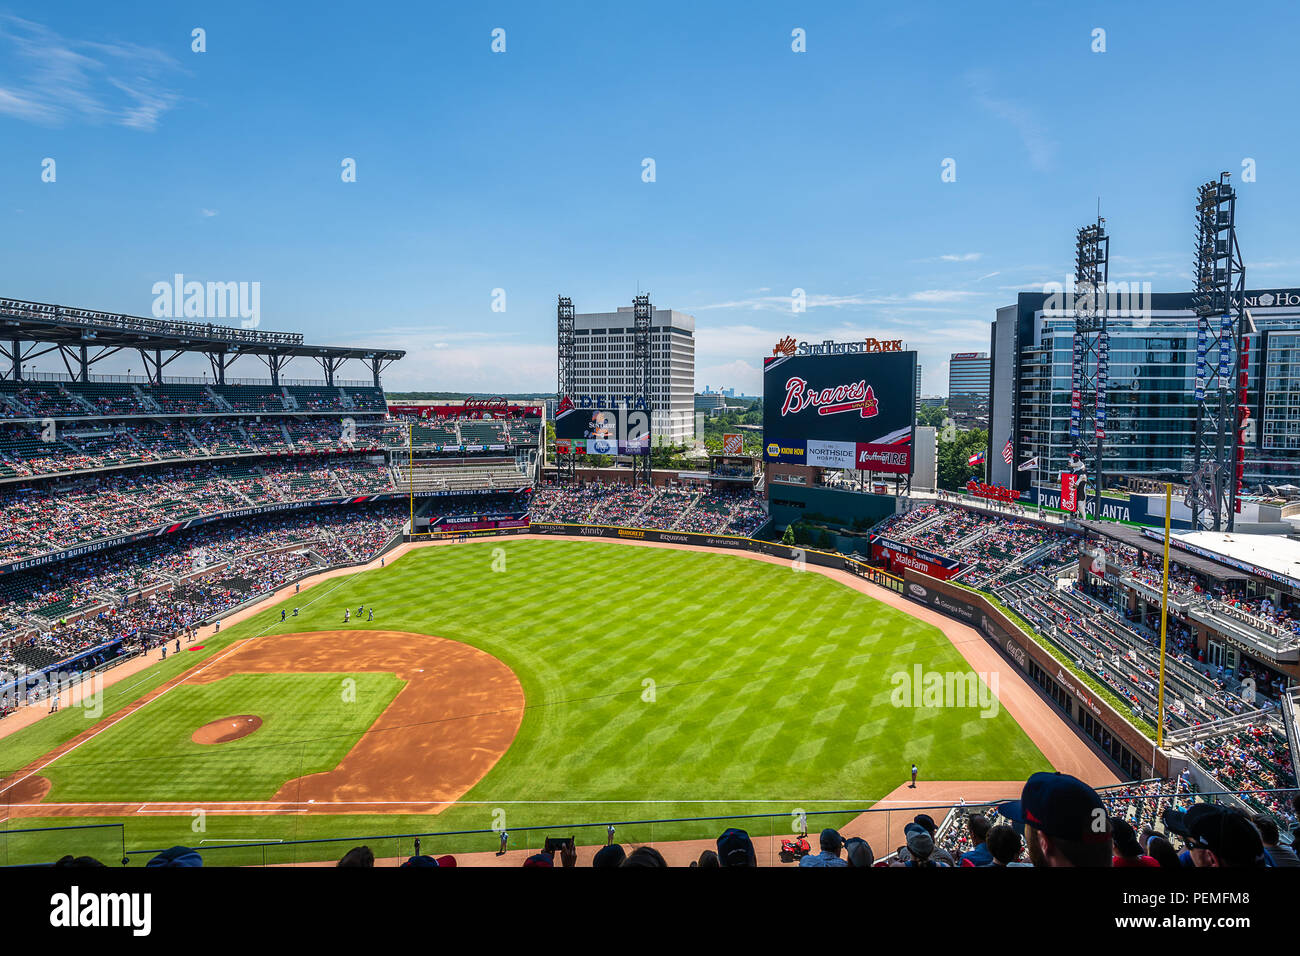 The Atlanta Braves' new stadium will be SunTrust Park, PHOTOS, Professional